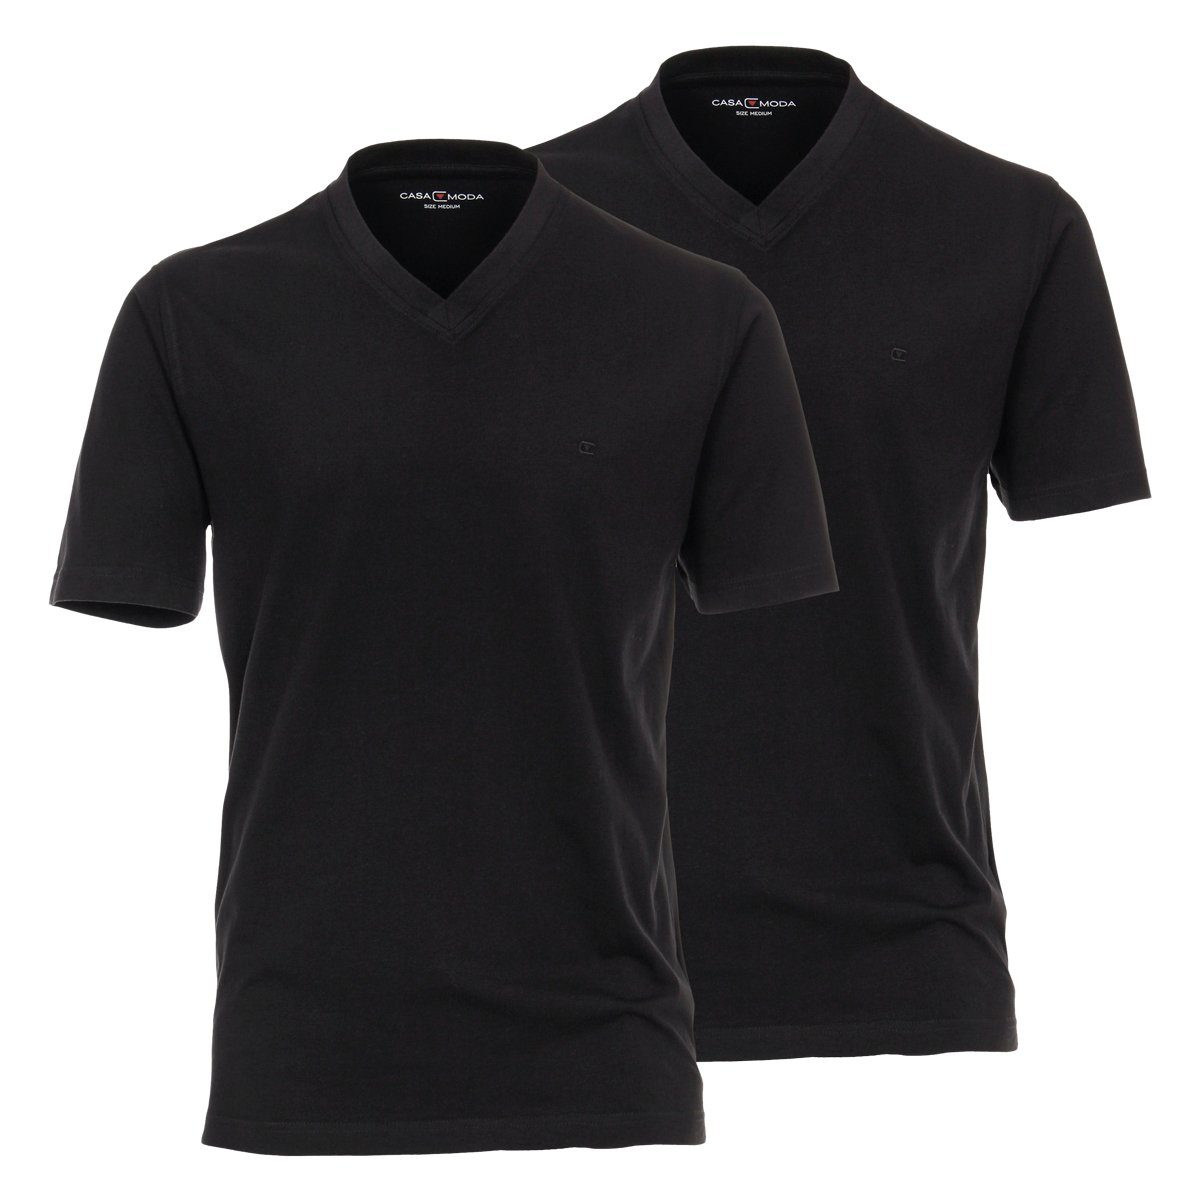 CASAMODA V-Shirt Übergrößen Doppelpack V-Ausschnitt T-Shirts schwarz CasaModa